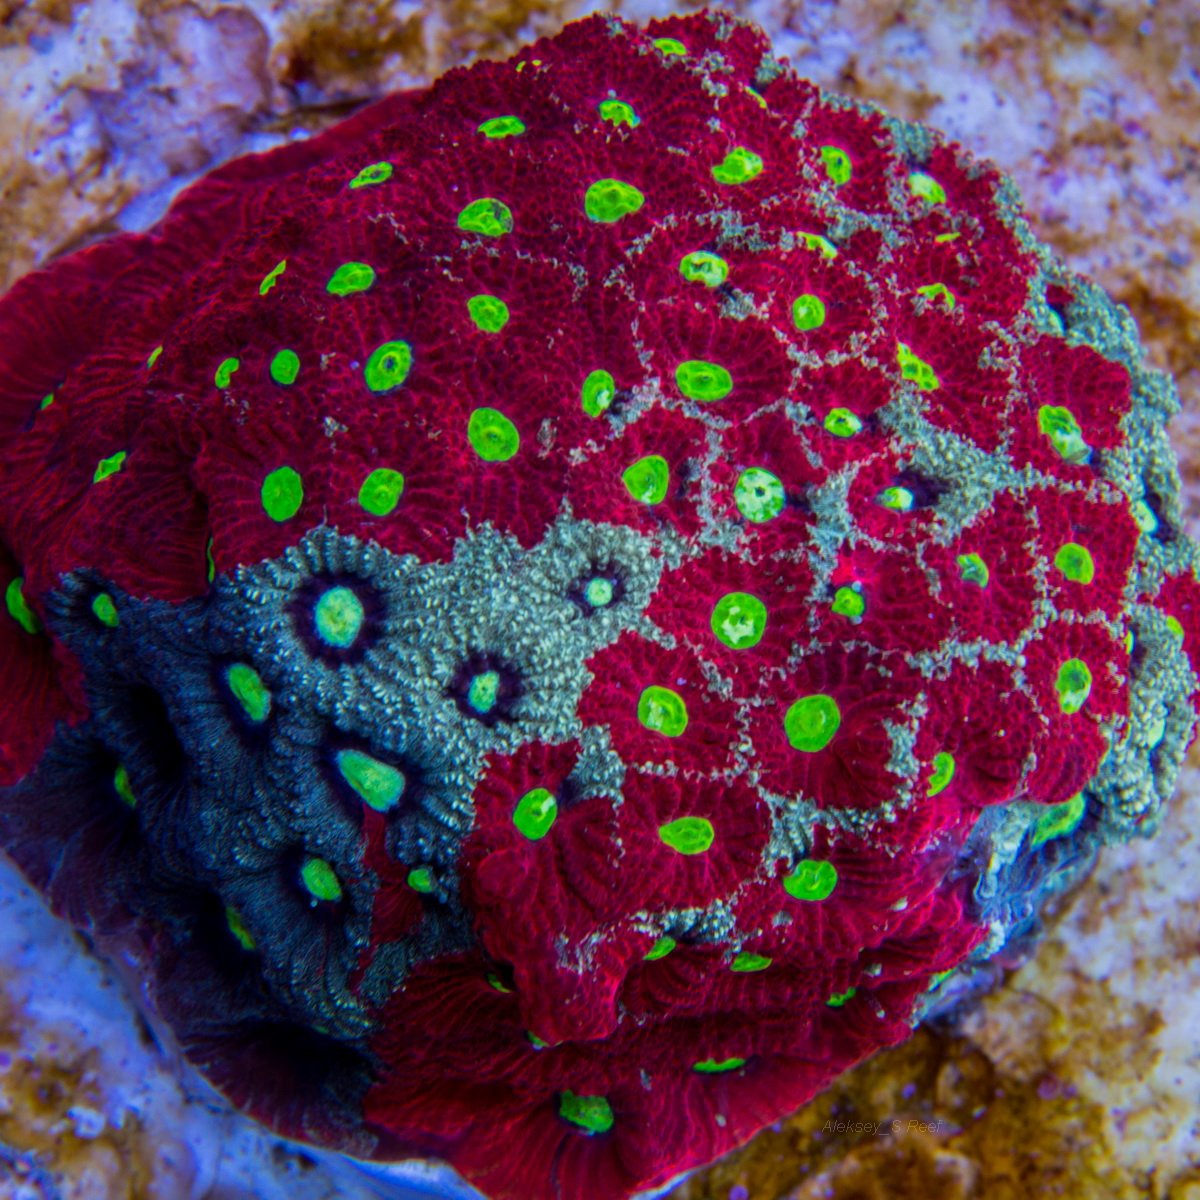 Coral h. Фавия коралл. Коралл Фавия Инферно. Коралл Фавия Пентагония. Мадрепоровые кораллы Фавия.